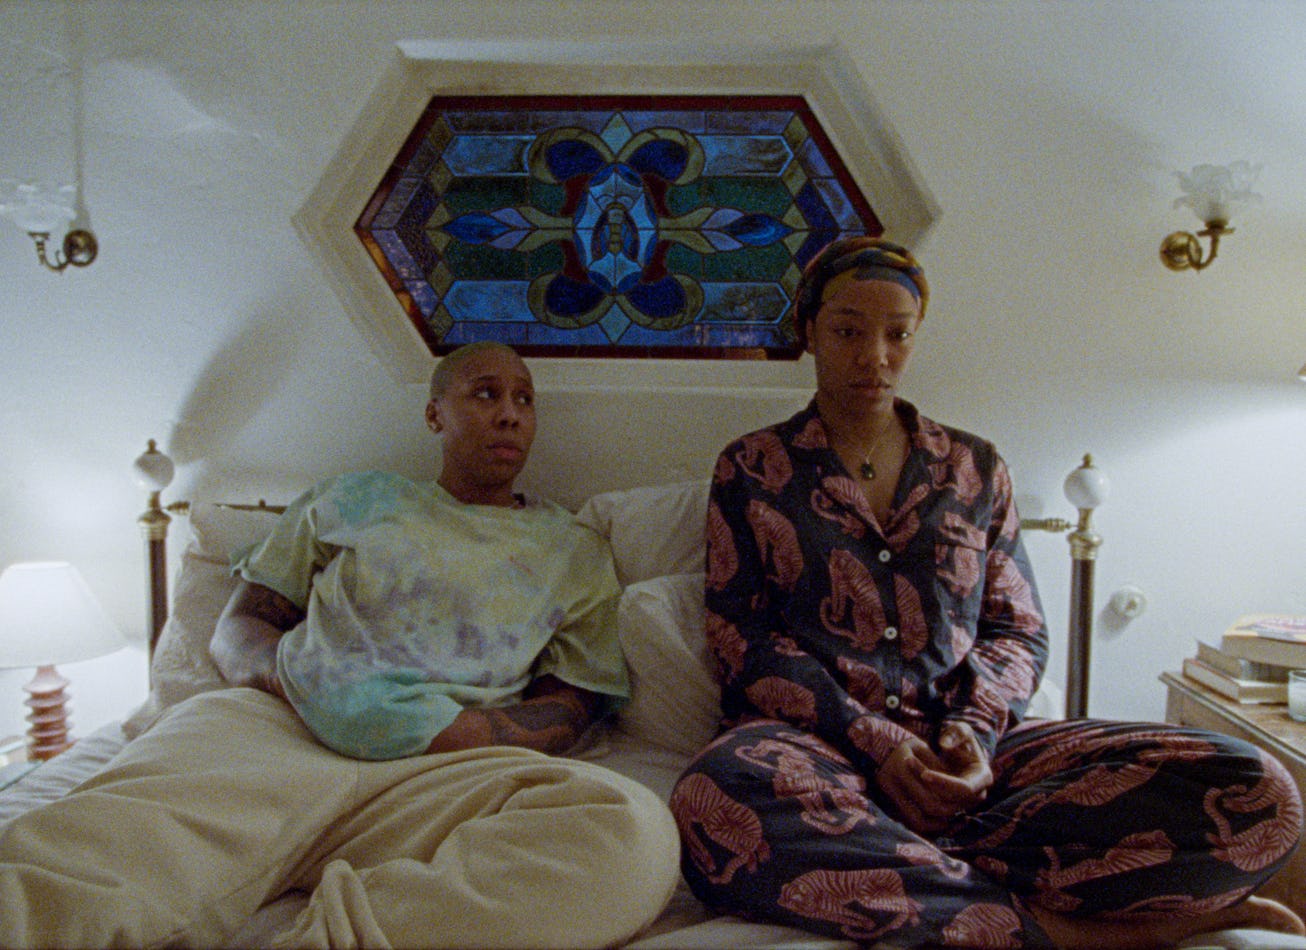 Lena Waithe and Naomie Ackie in season three of Aziz Ansari's 'Master of None' on Netflix.